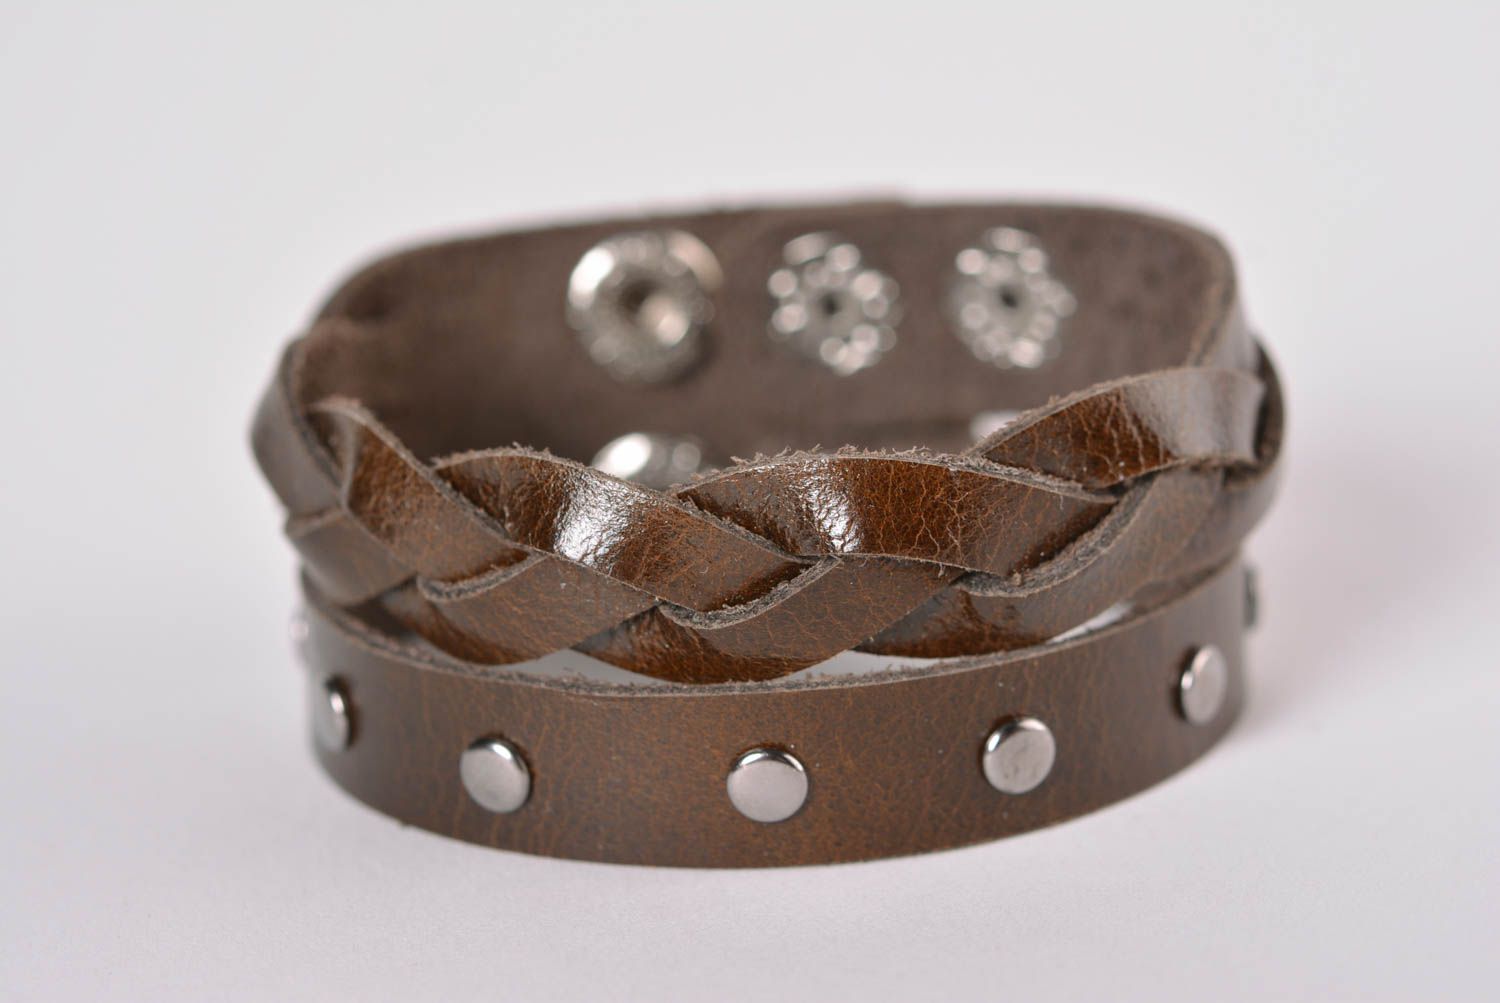 Unusual handmade bracelet designs leather bracelet leather goods ideas photo 1